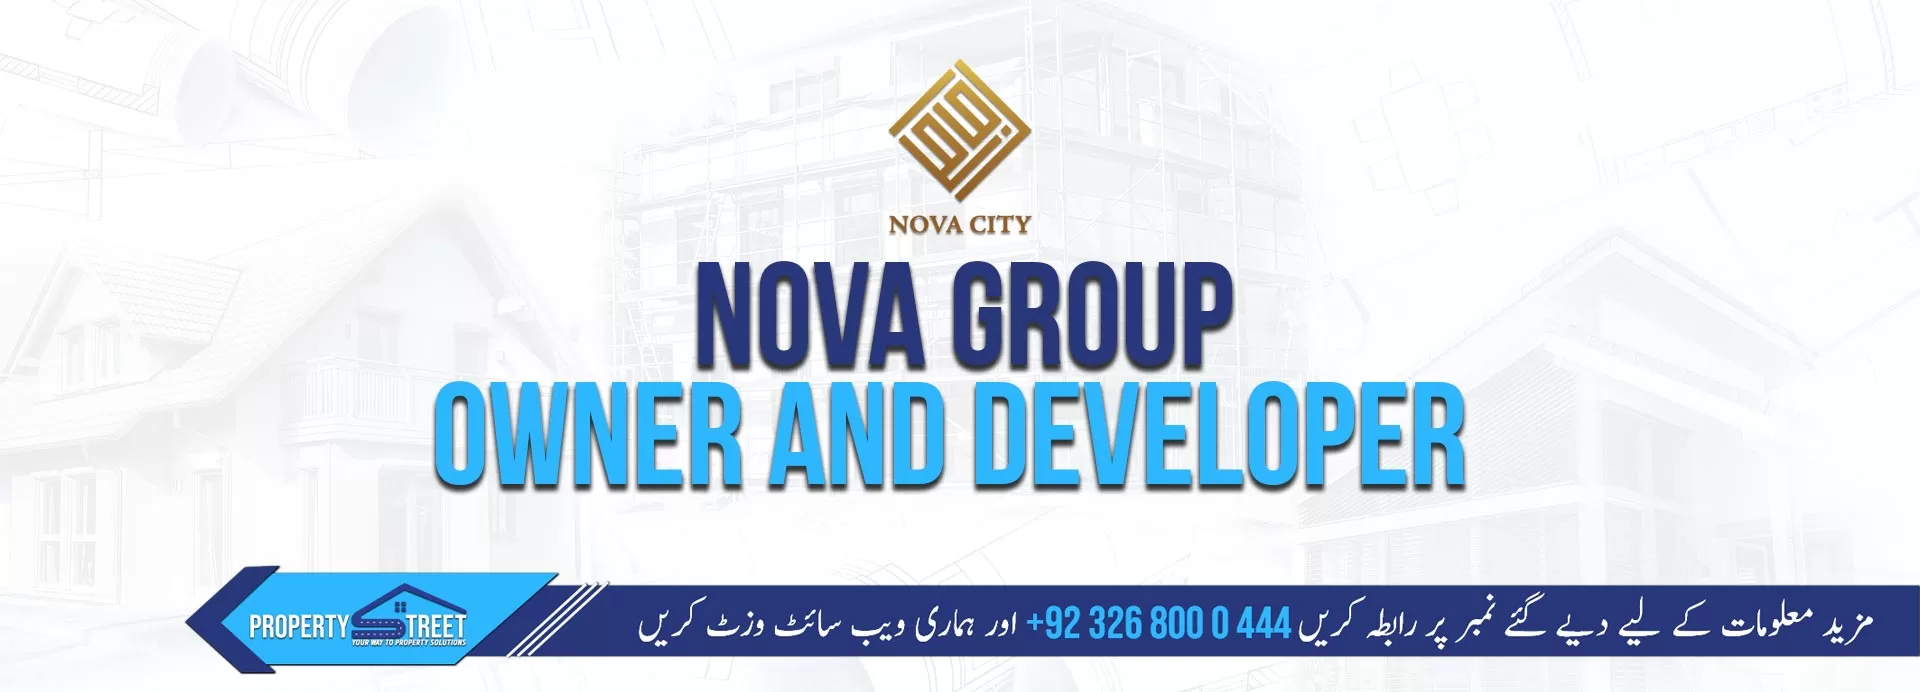 Nova City Owner and Developer